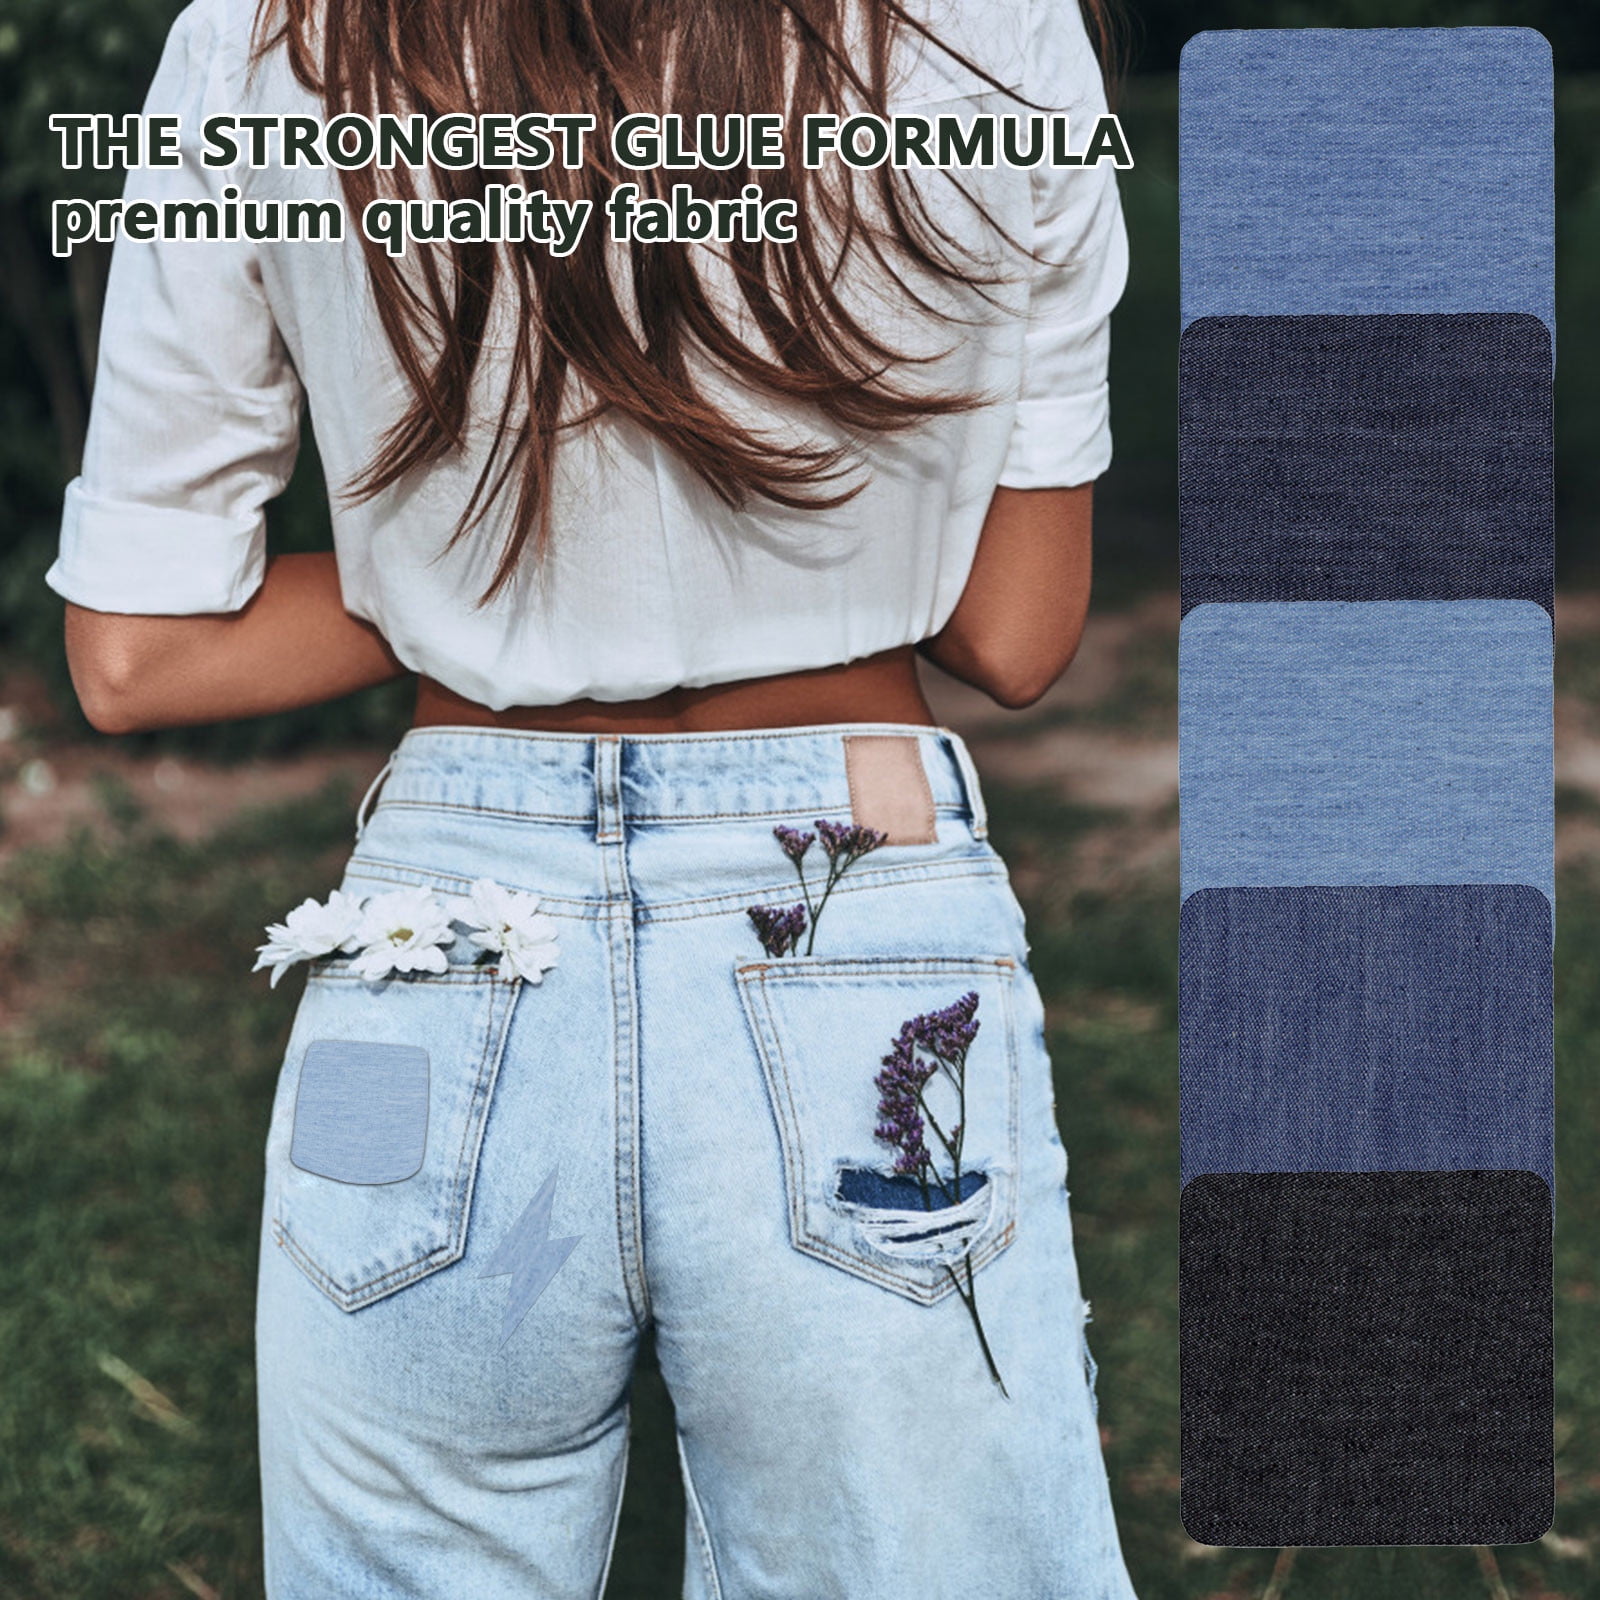 Share 146+ denim patches for inside jeans super hot - dedaotaonec